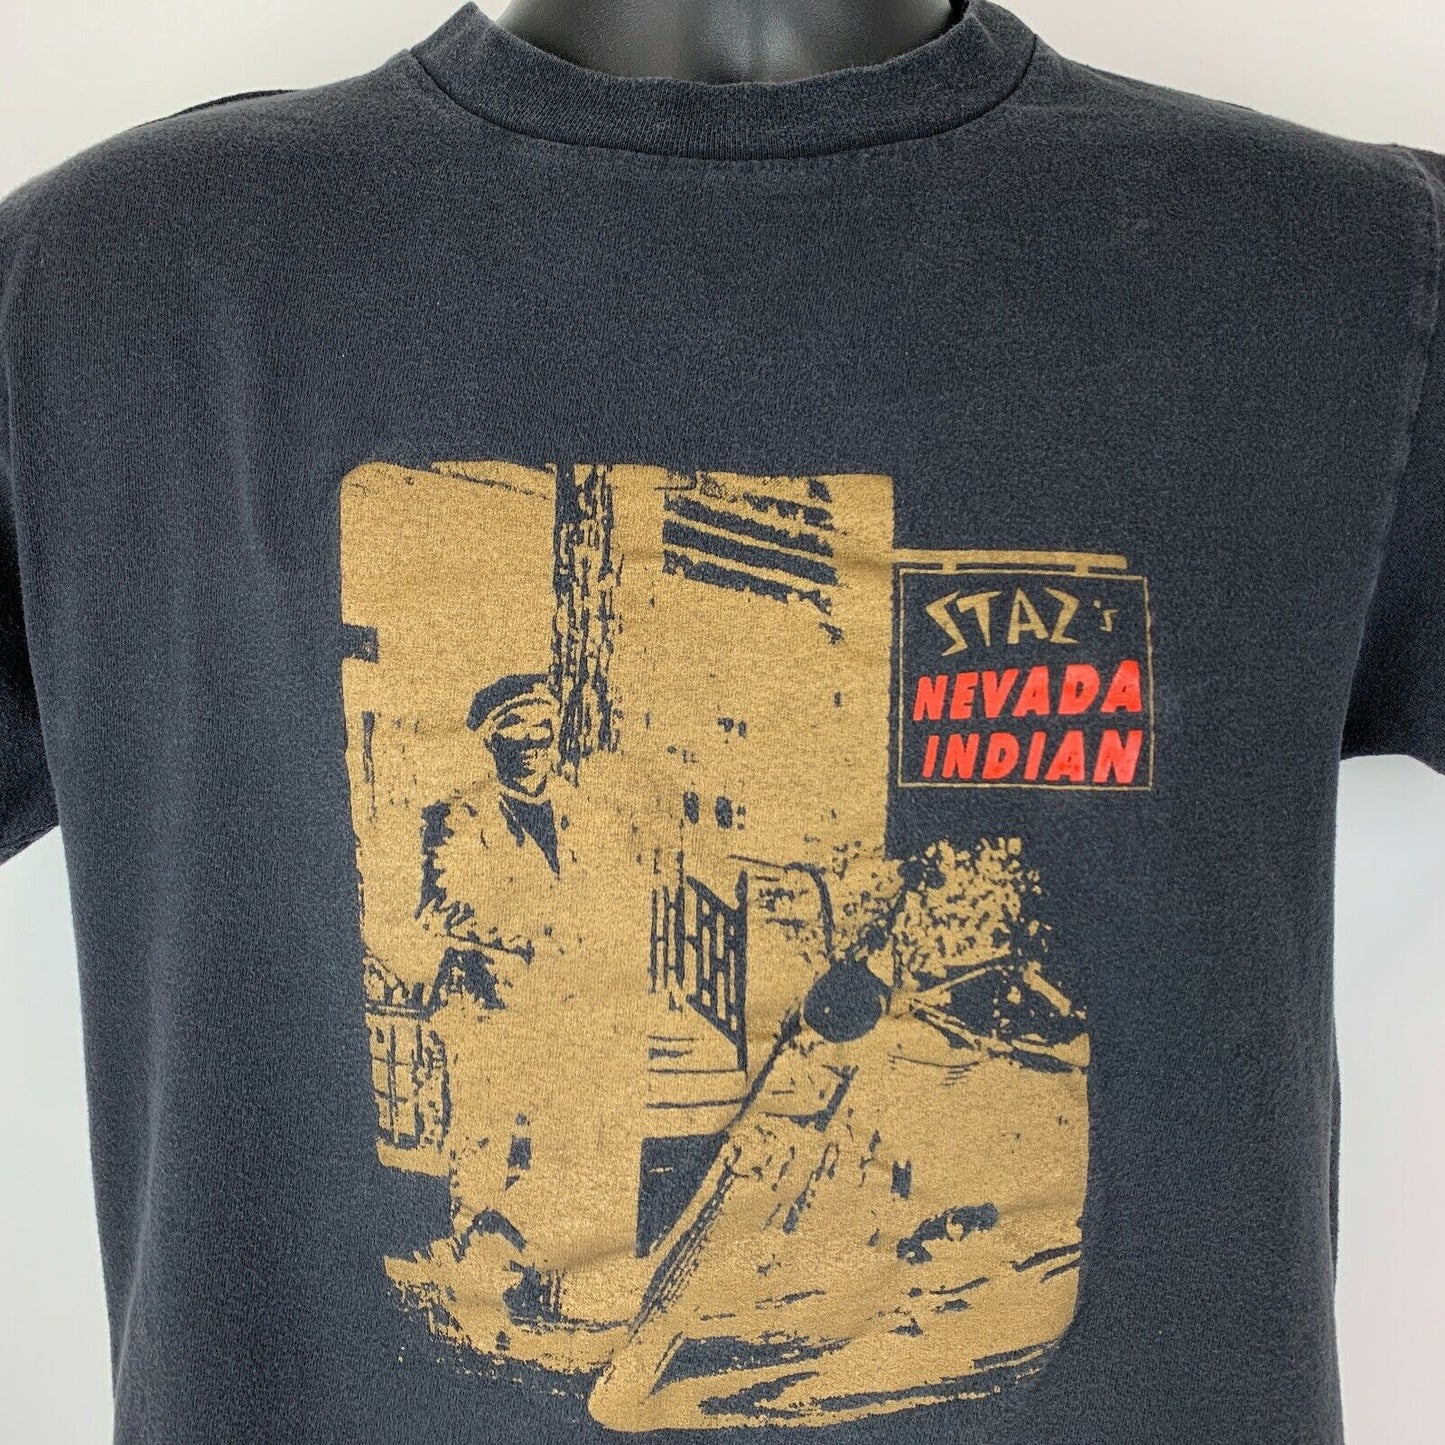 Stazs Nevada Indian Vintage 90s T Shirt Medium Motorcycles Biker Dealer Tee